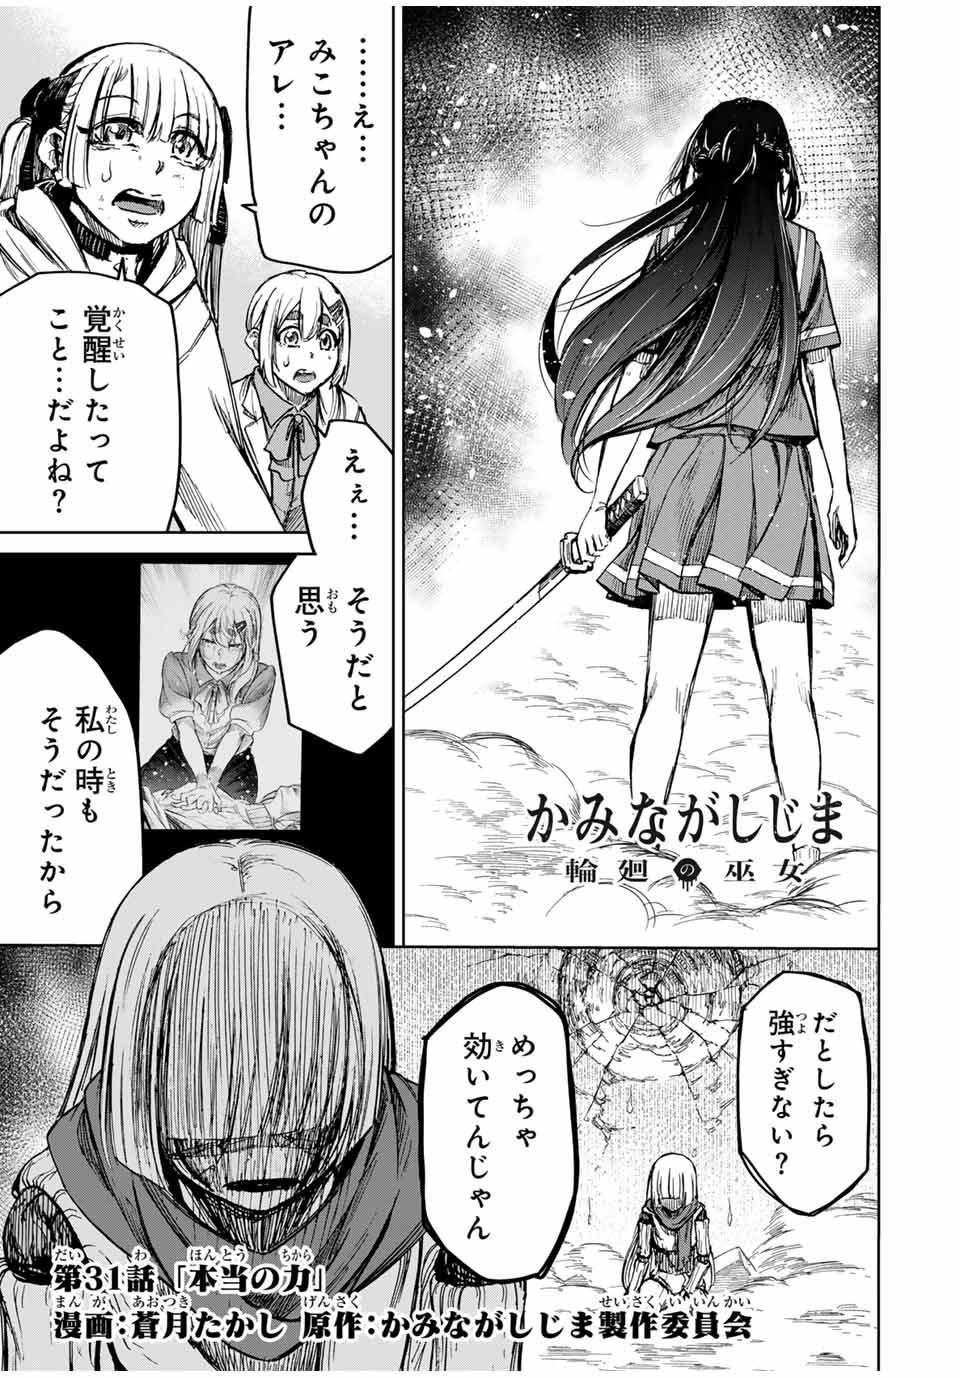 Kaminagashijima – Rinne no Miko - Chapter 31 - Page 1